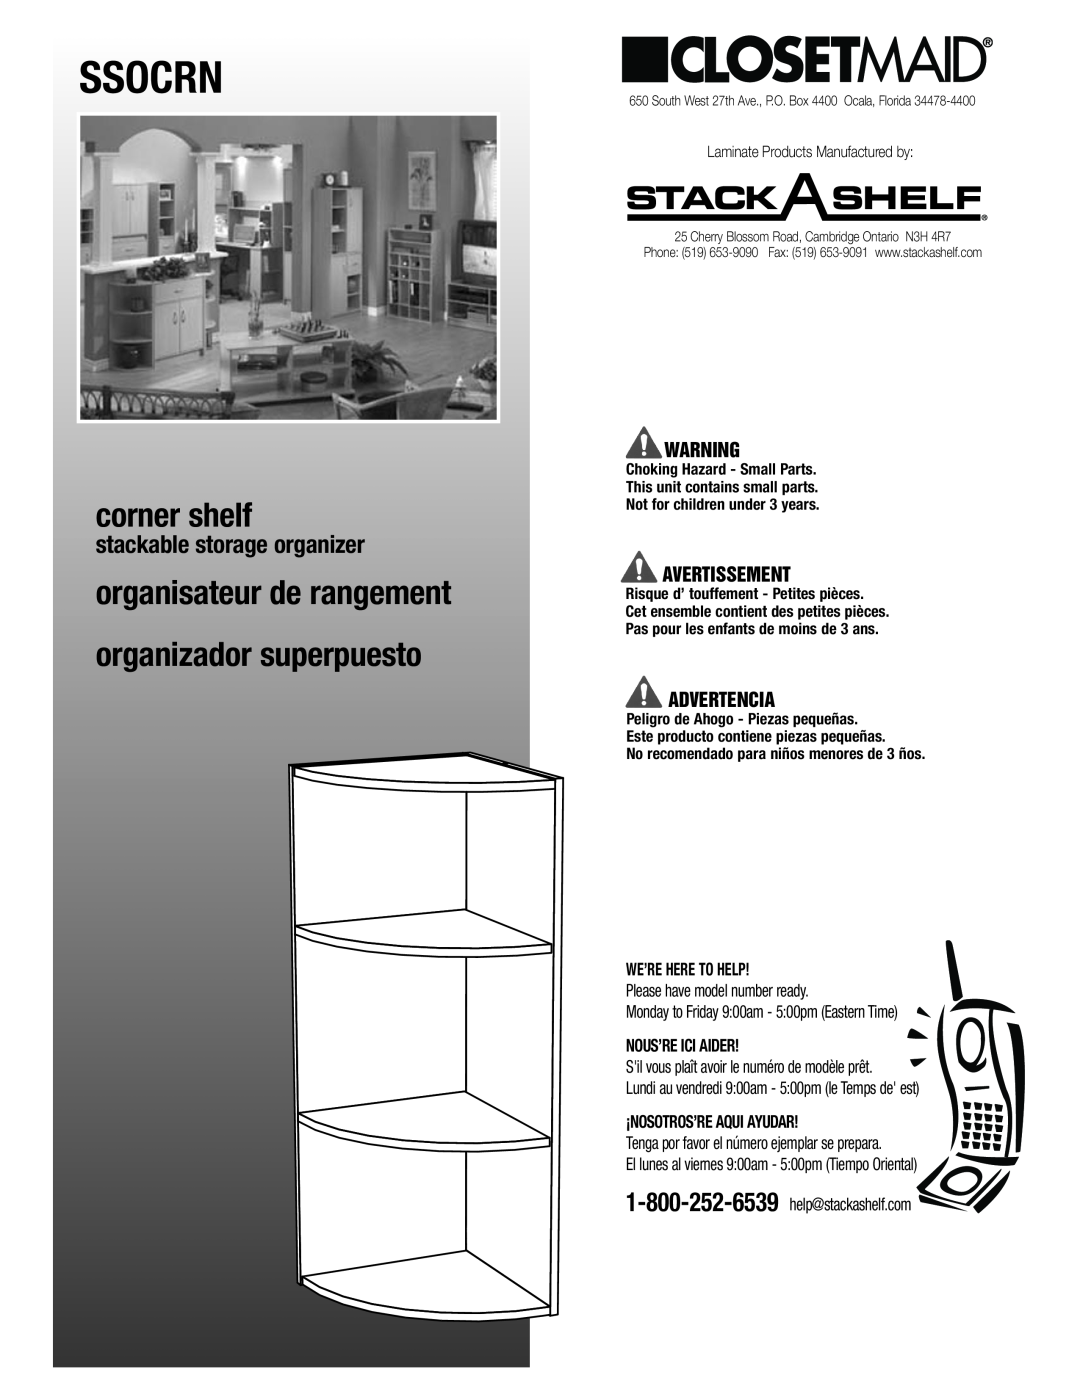 Closet Maid SSOCRN manual stackable storage organizer, Ssocrn, corner shelf, Avertissement, Advertencia, Nous’Re Ici Aider 